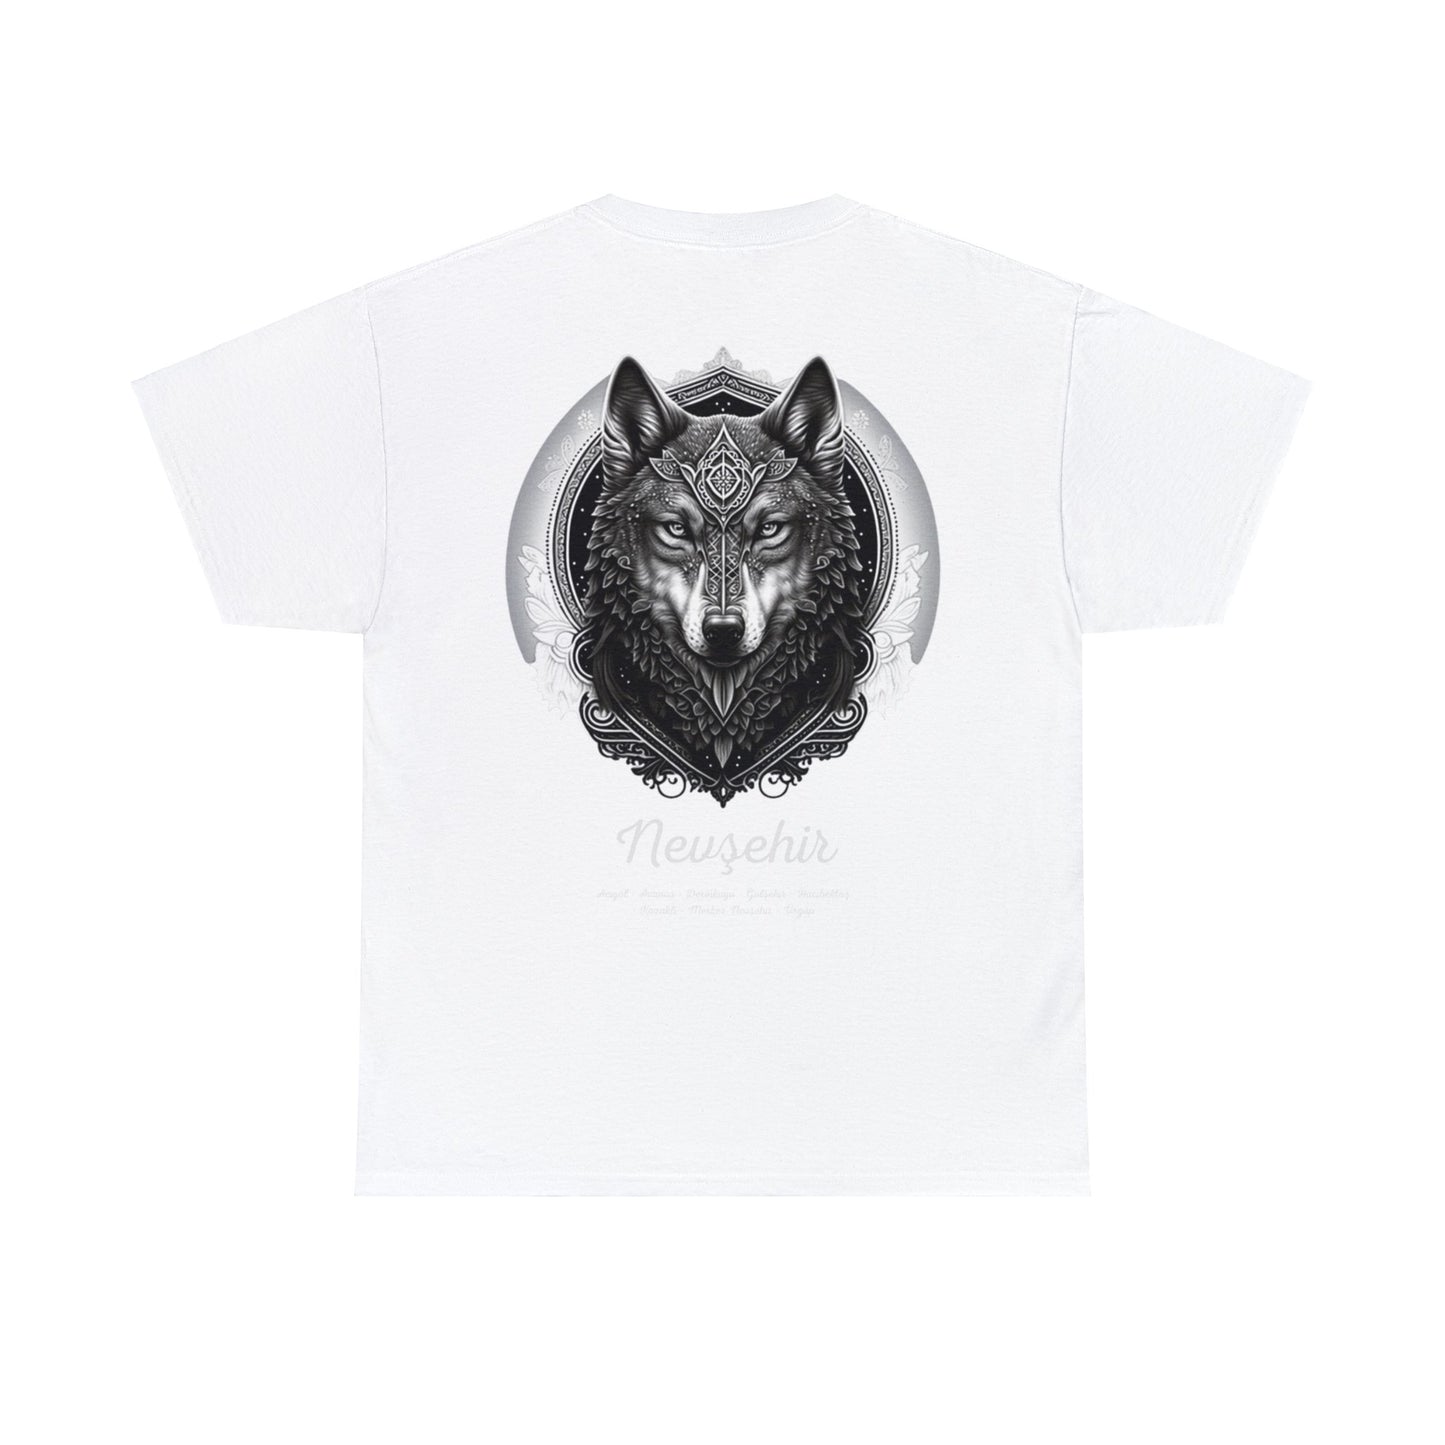 Kurt - 50 Nevşehir - T-Shirt - Back Print - Black/White